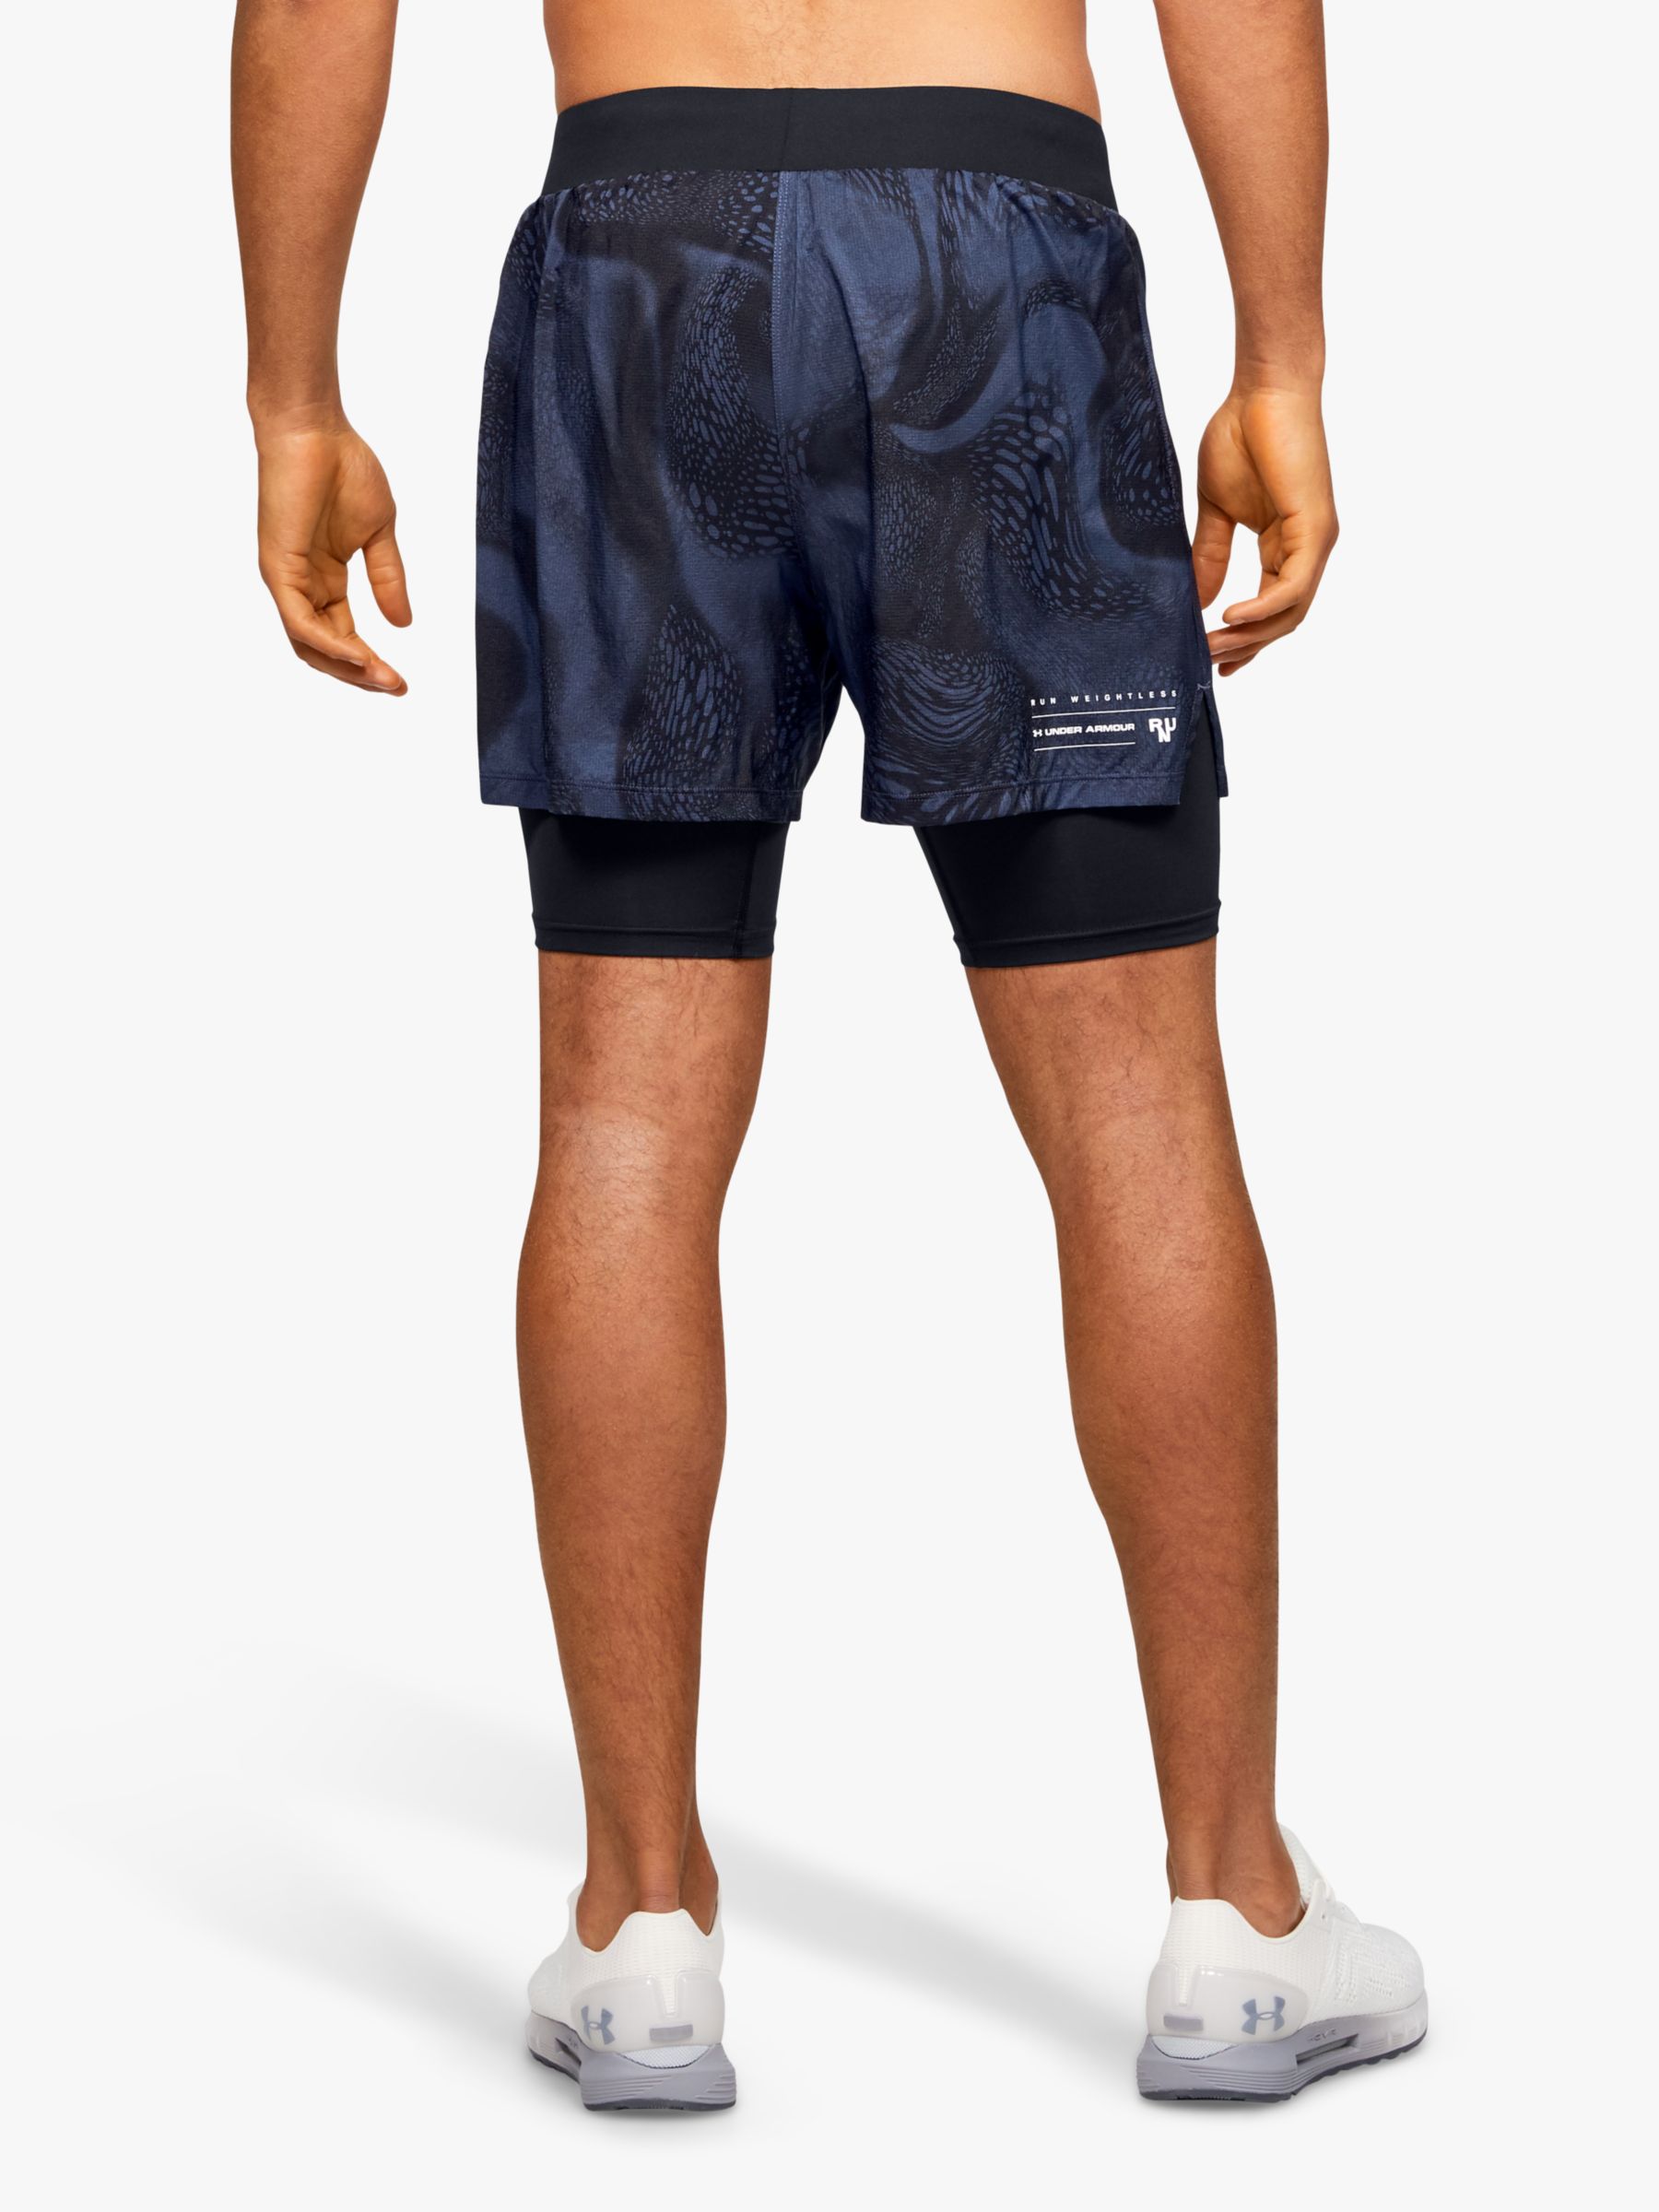 underarmour running shorts